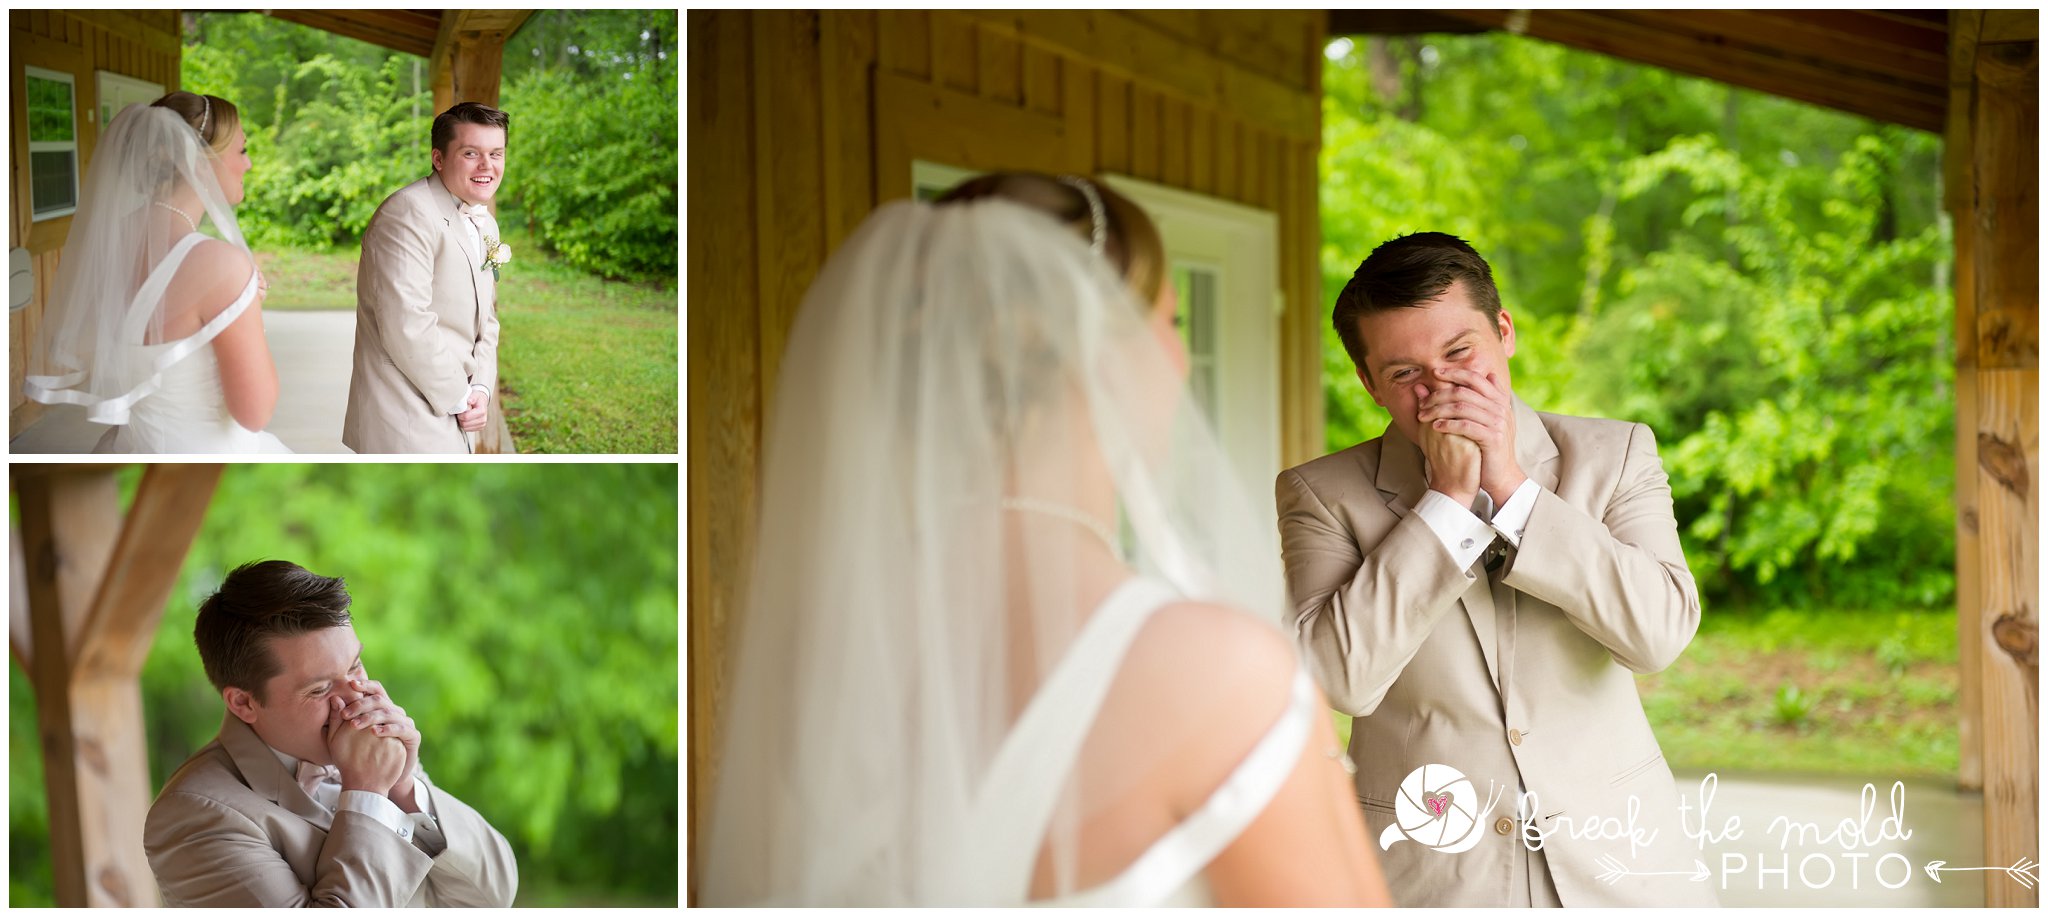 thirteen-wedding-moments-photographer-knoxville-tn_1127.jpg